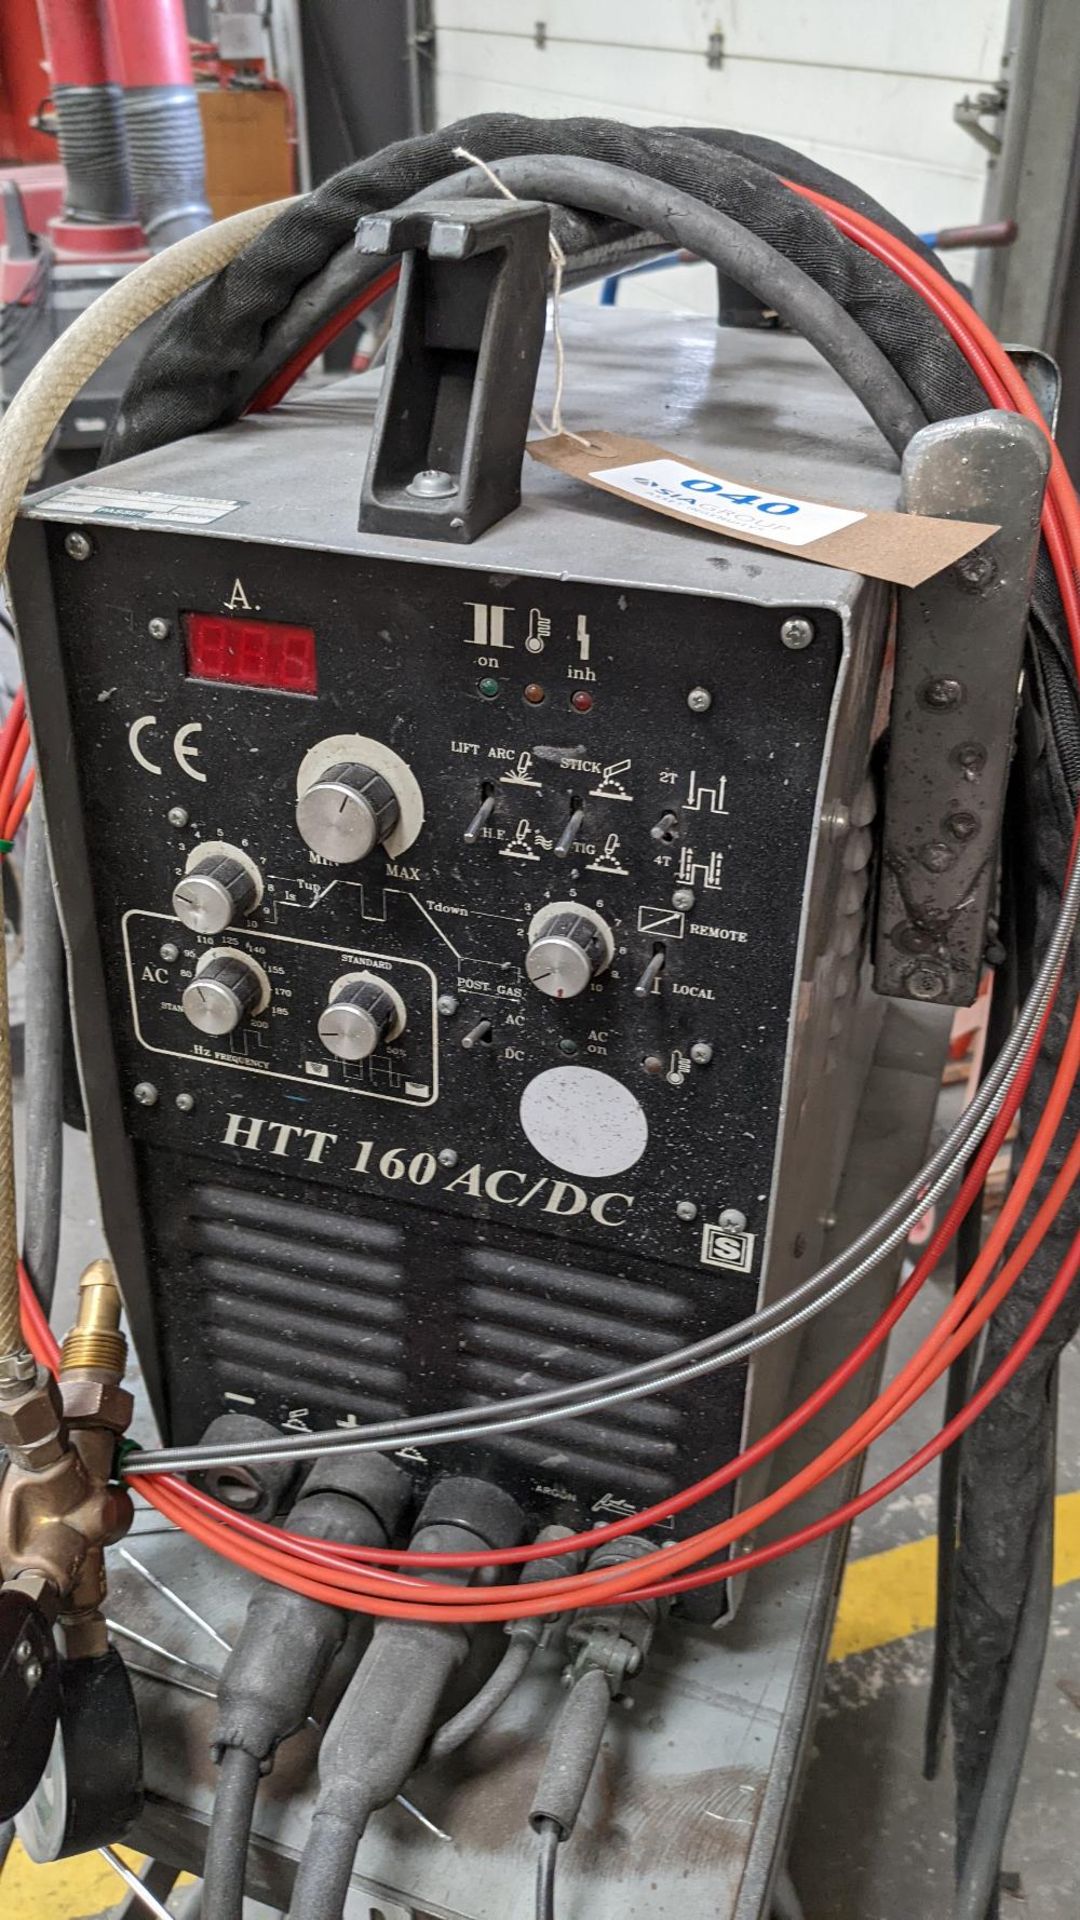 Hi-Tech HTT 160 AC/DC welding power source - Image 2 of 5